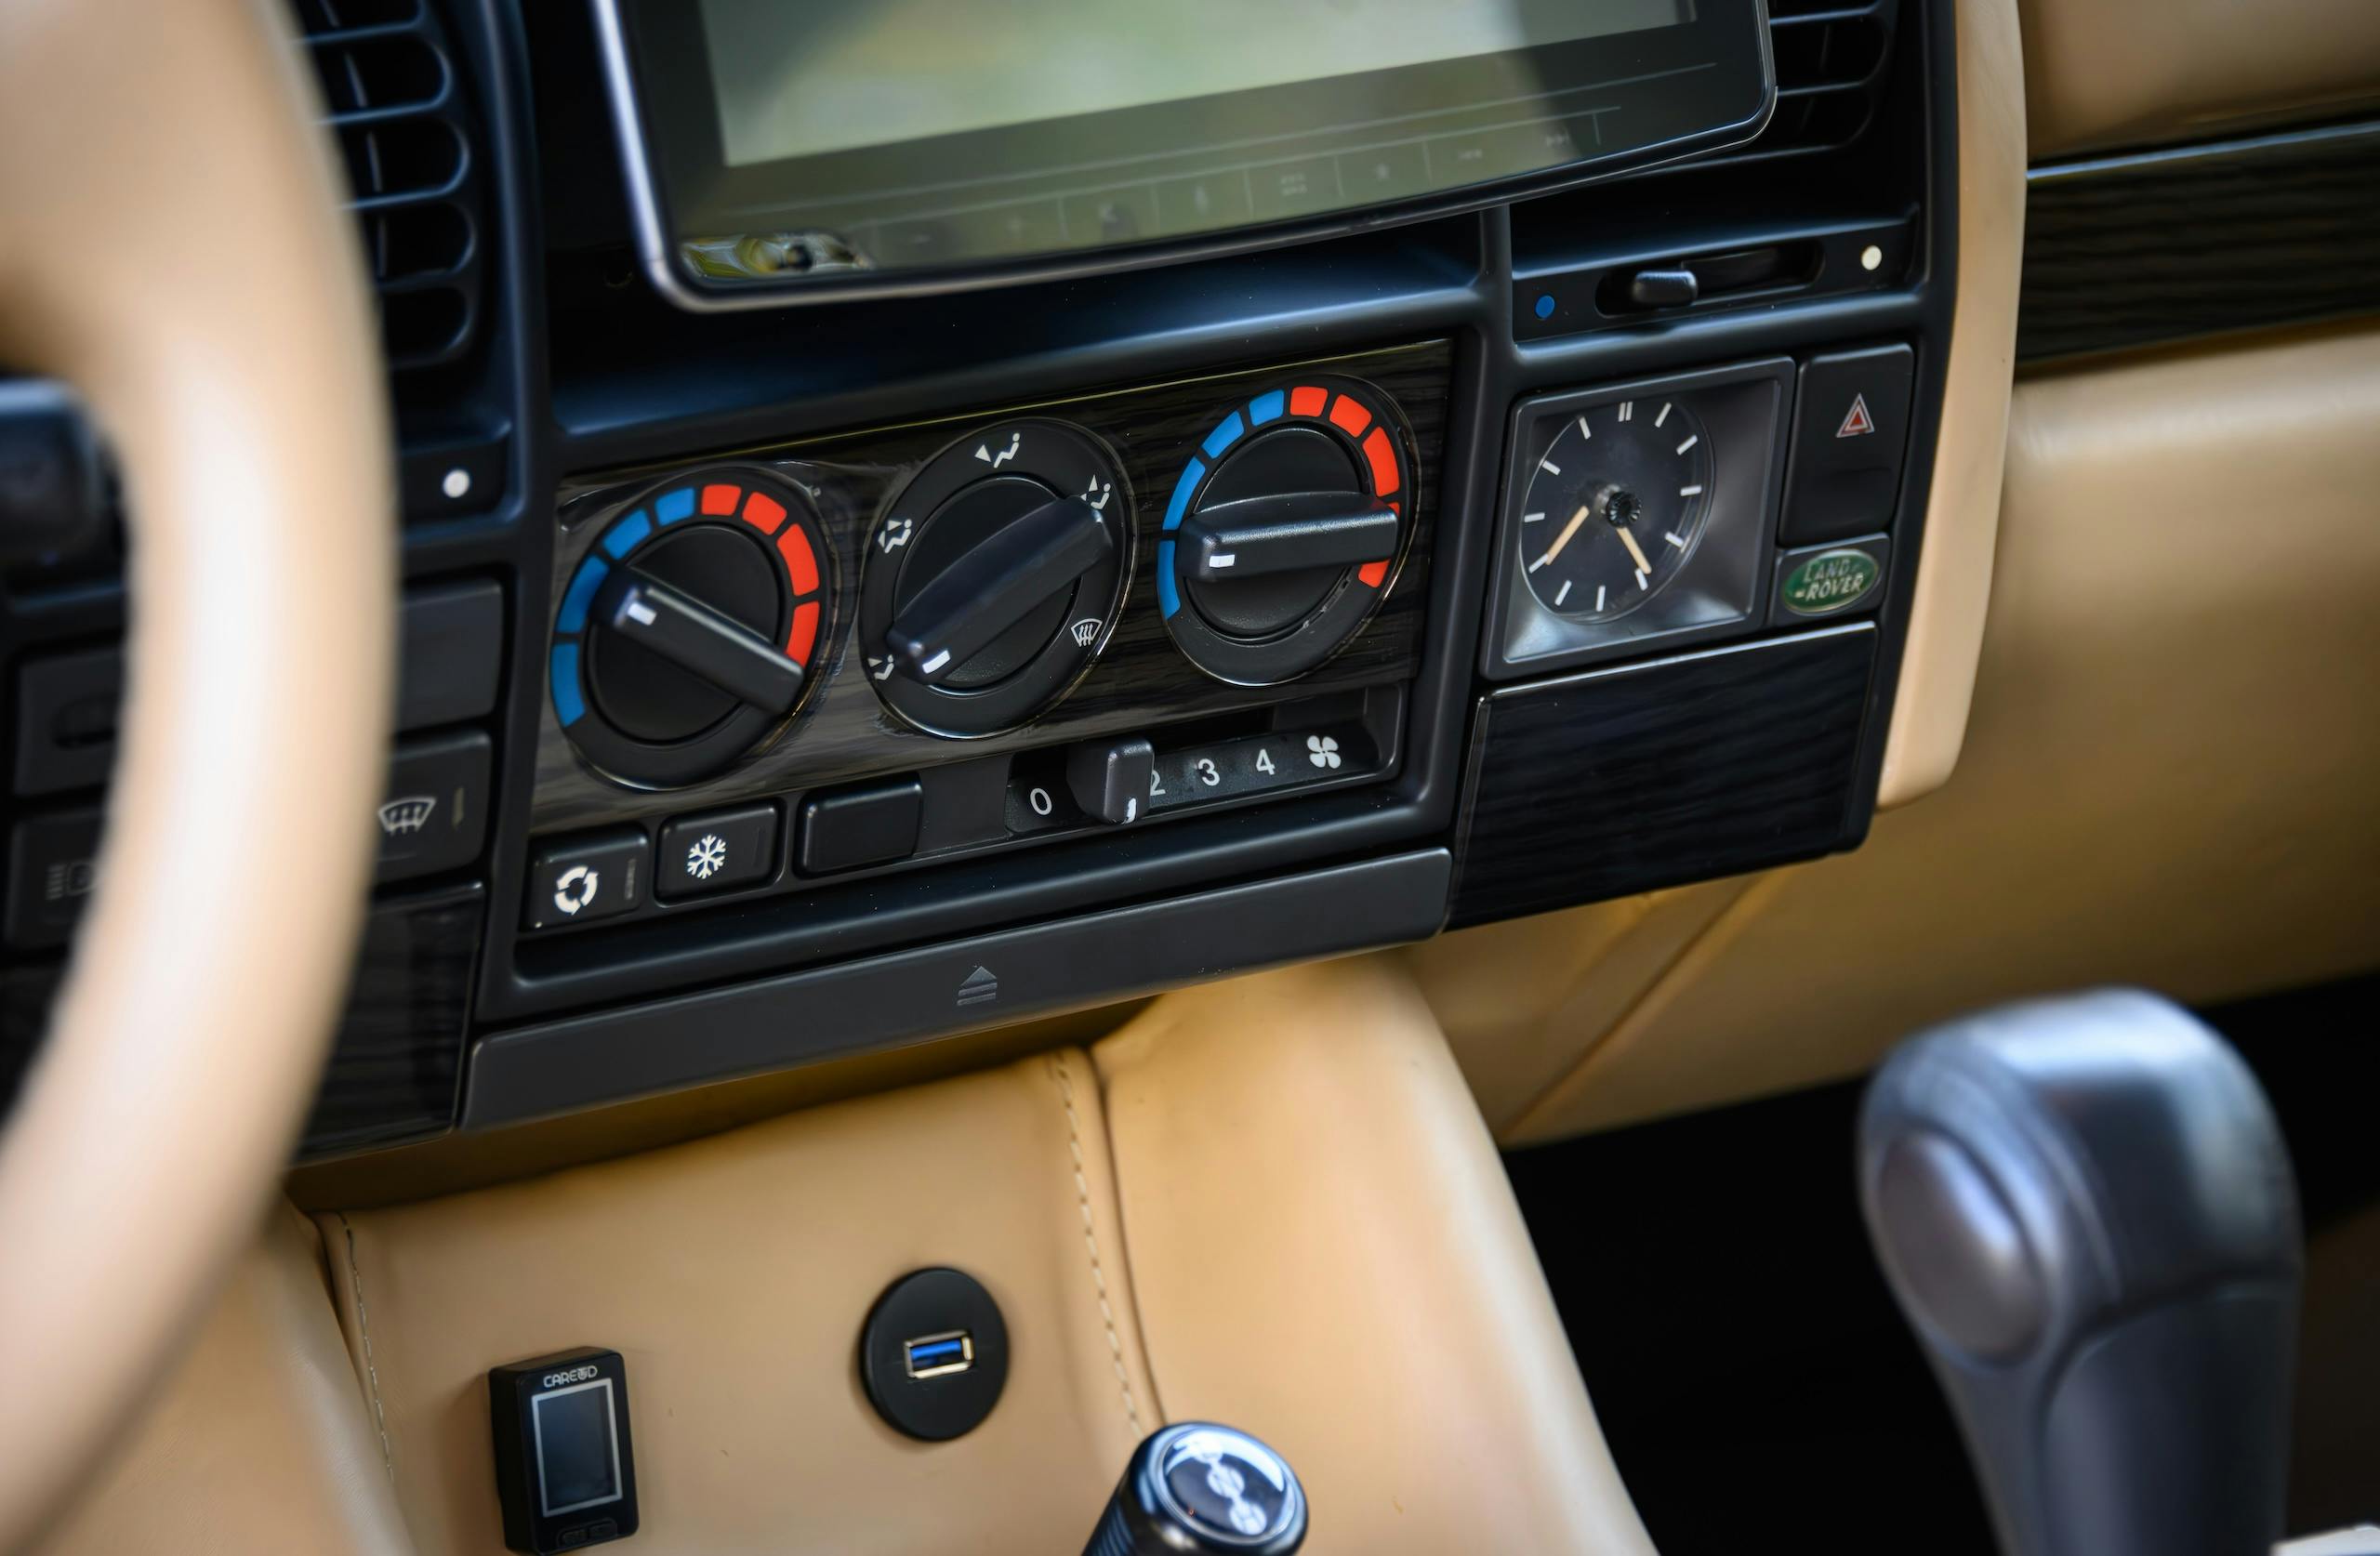 ECD Custom Range Rover interior climate controls